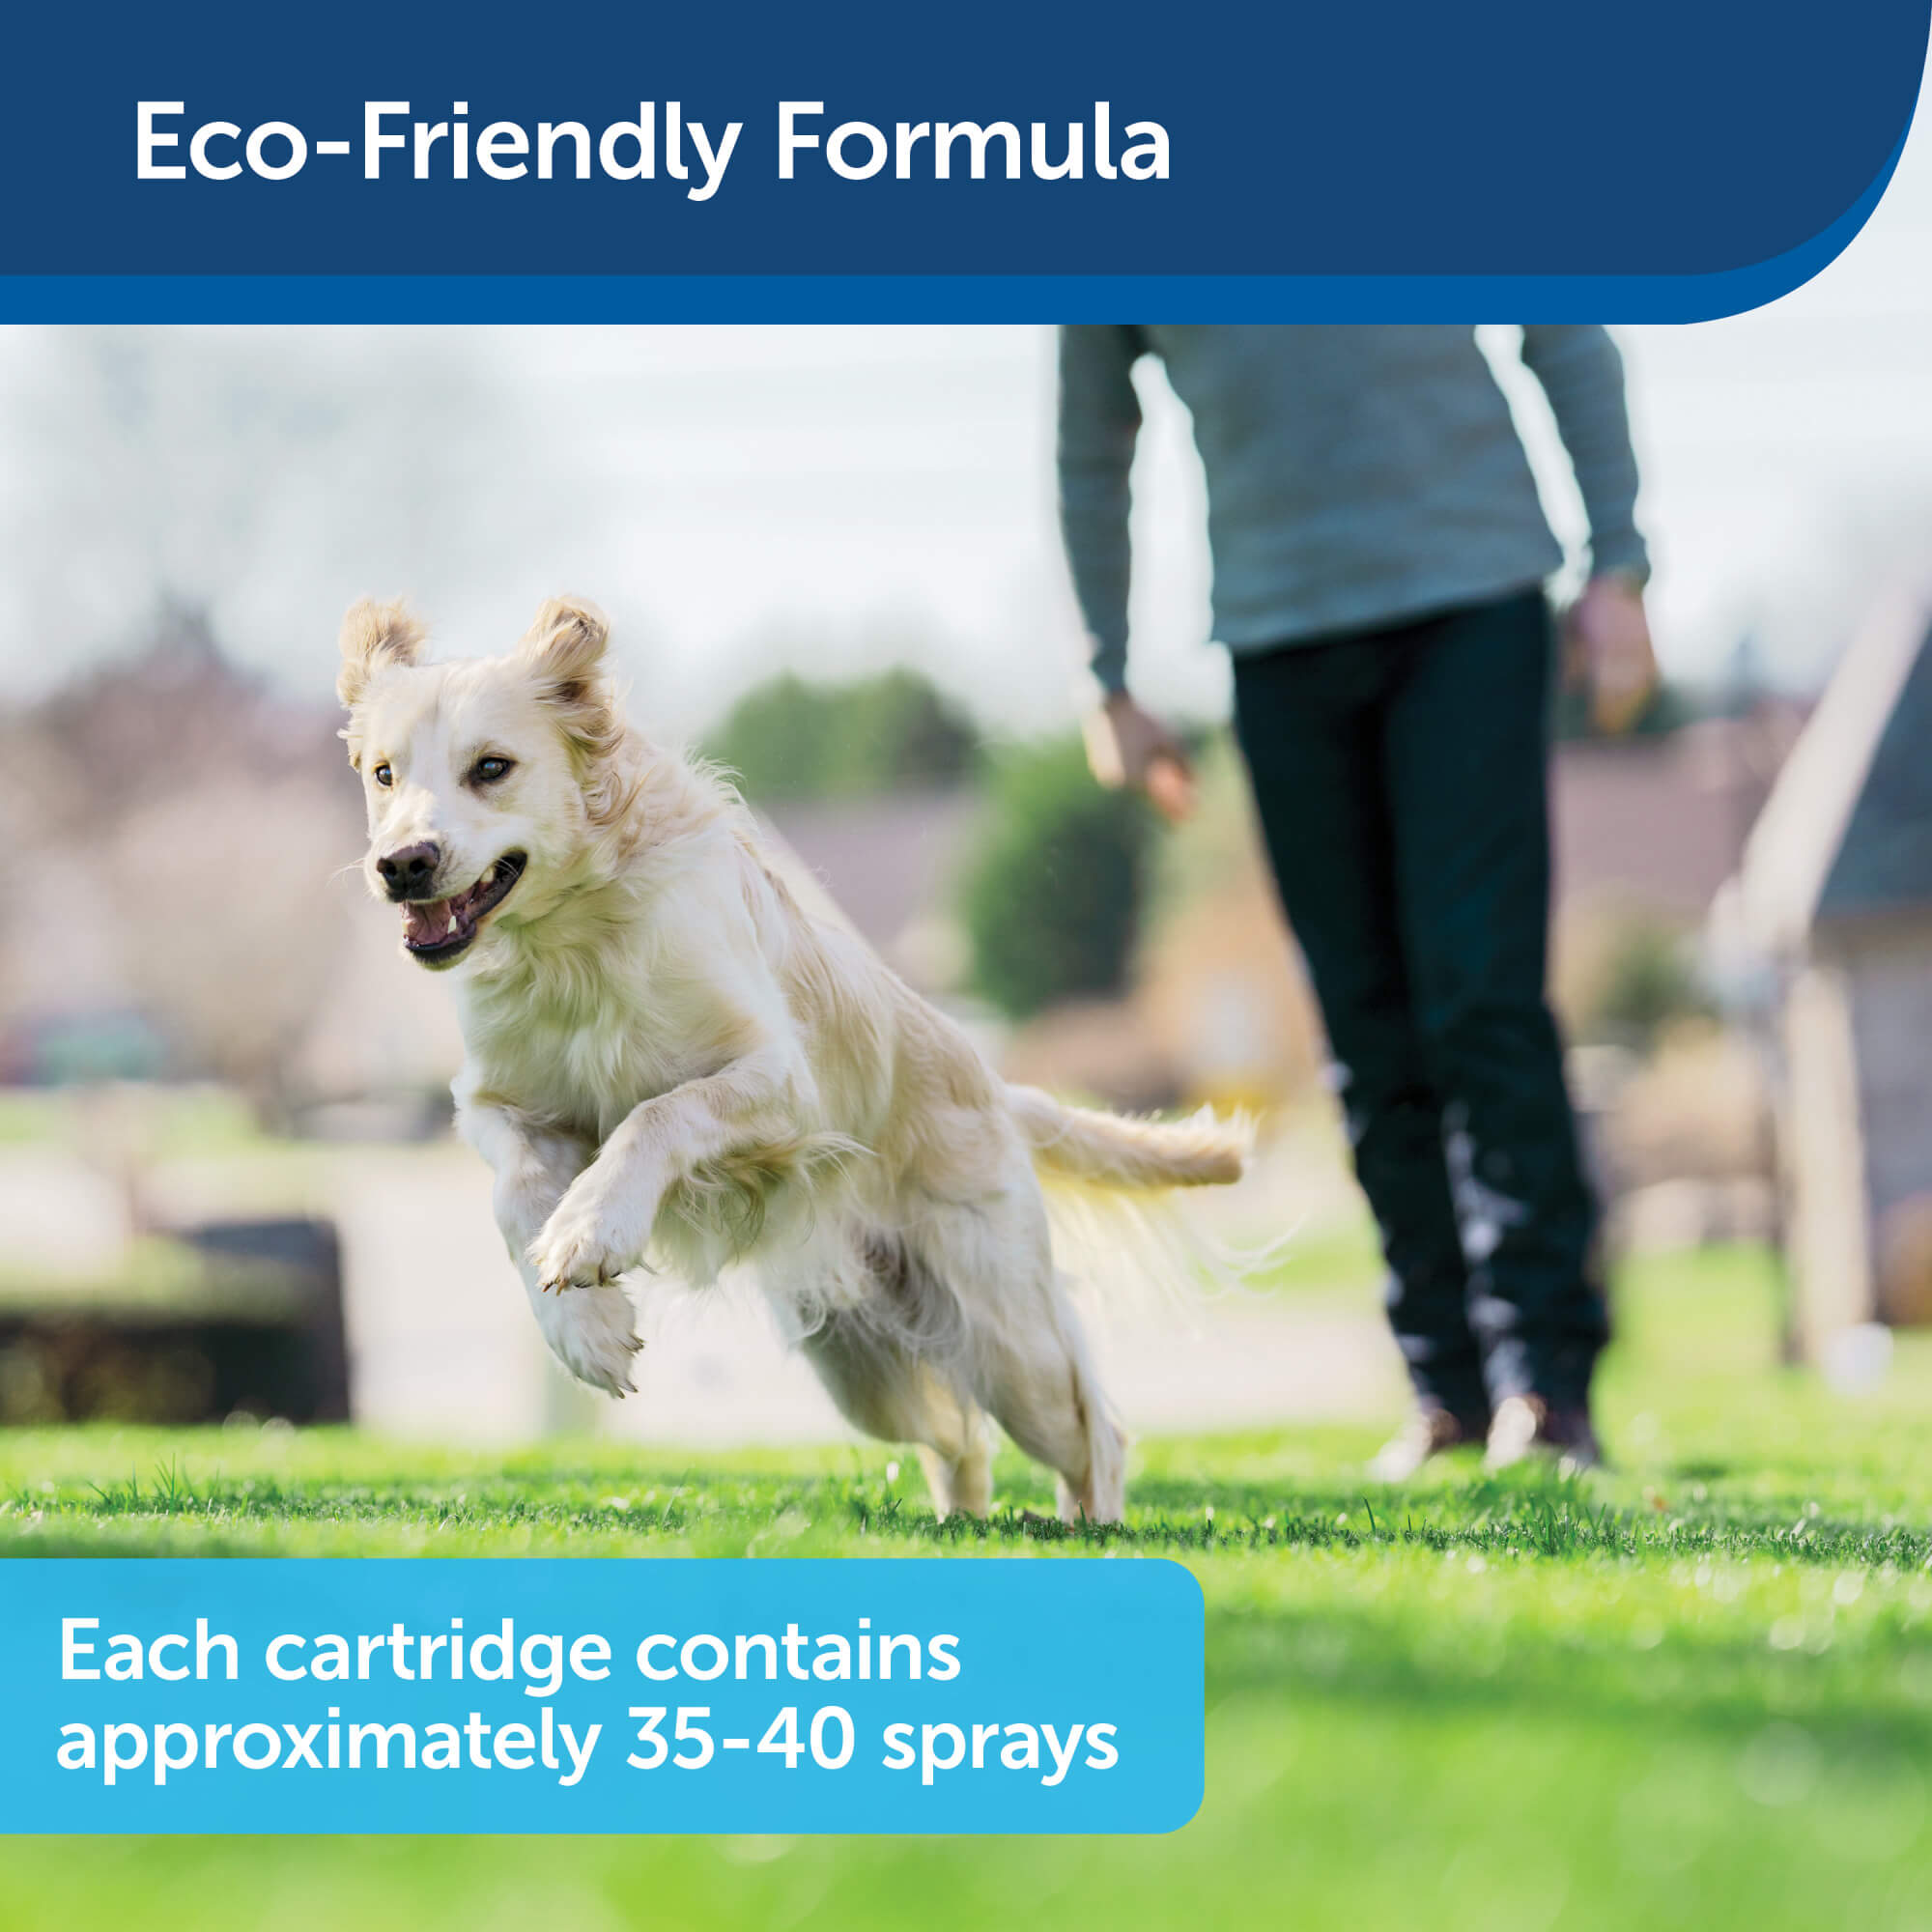 Eco-friendly formula